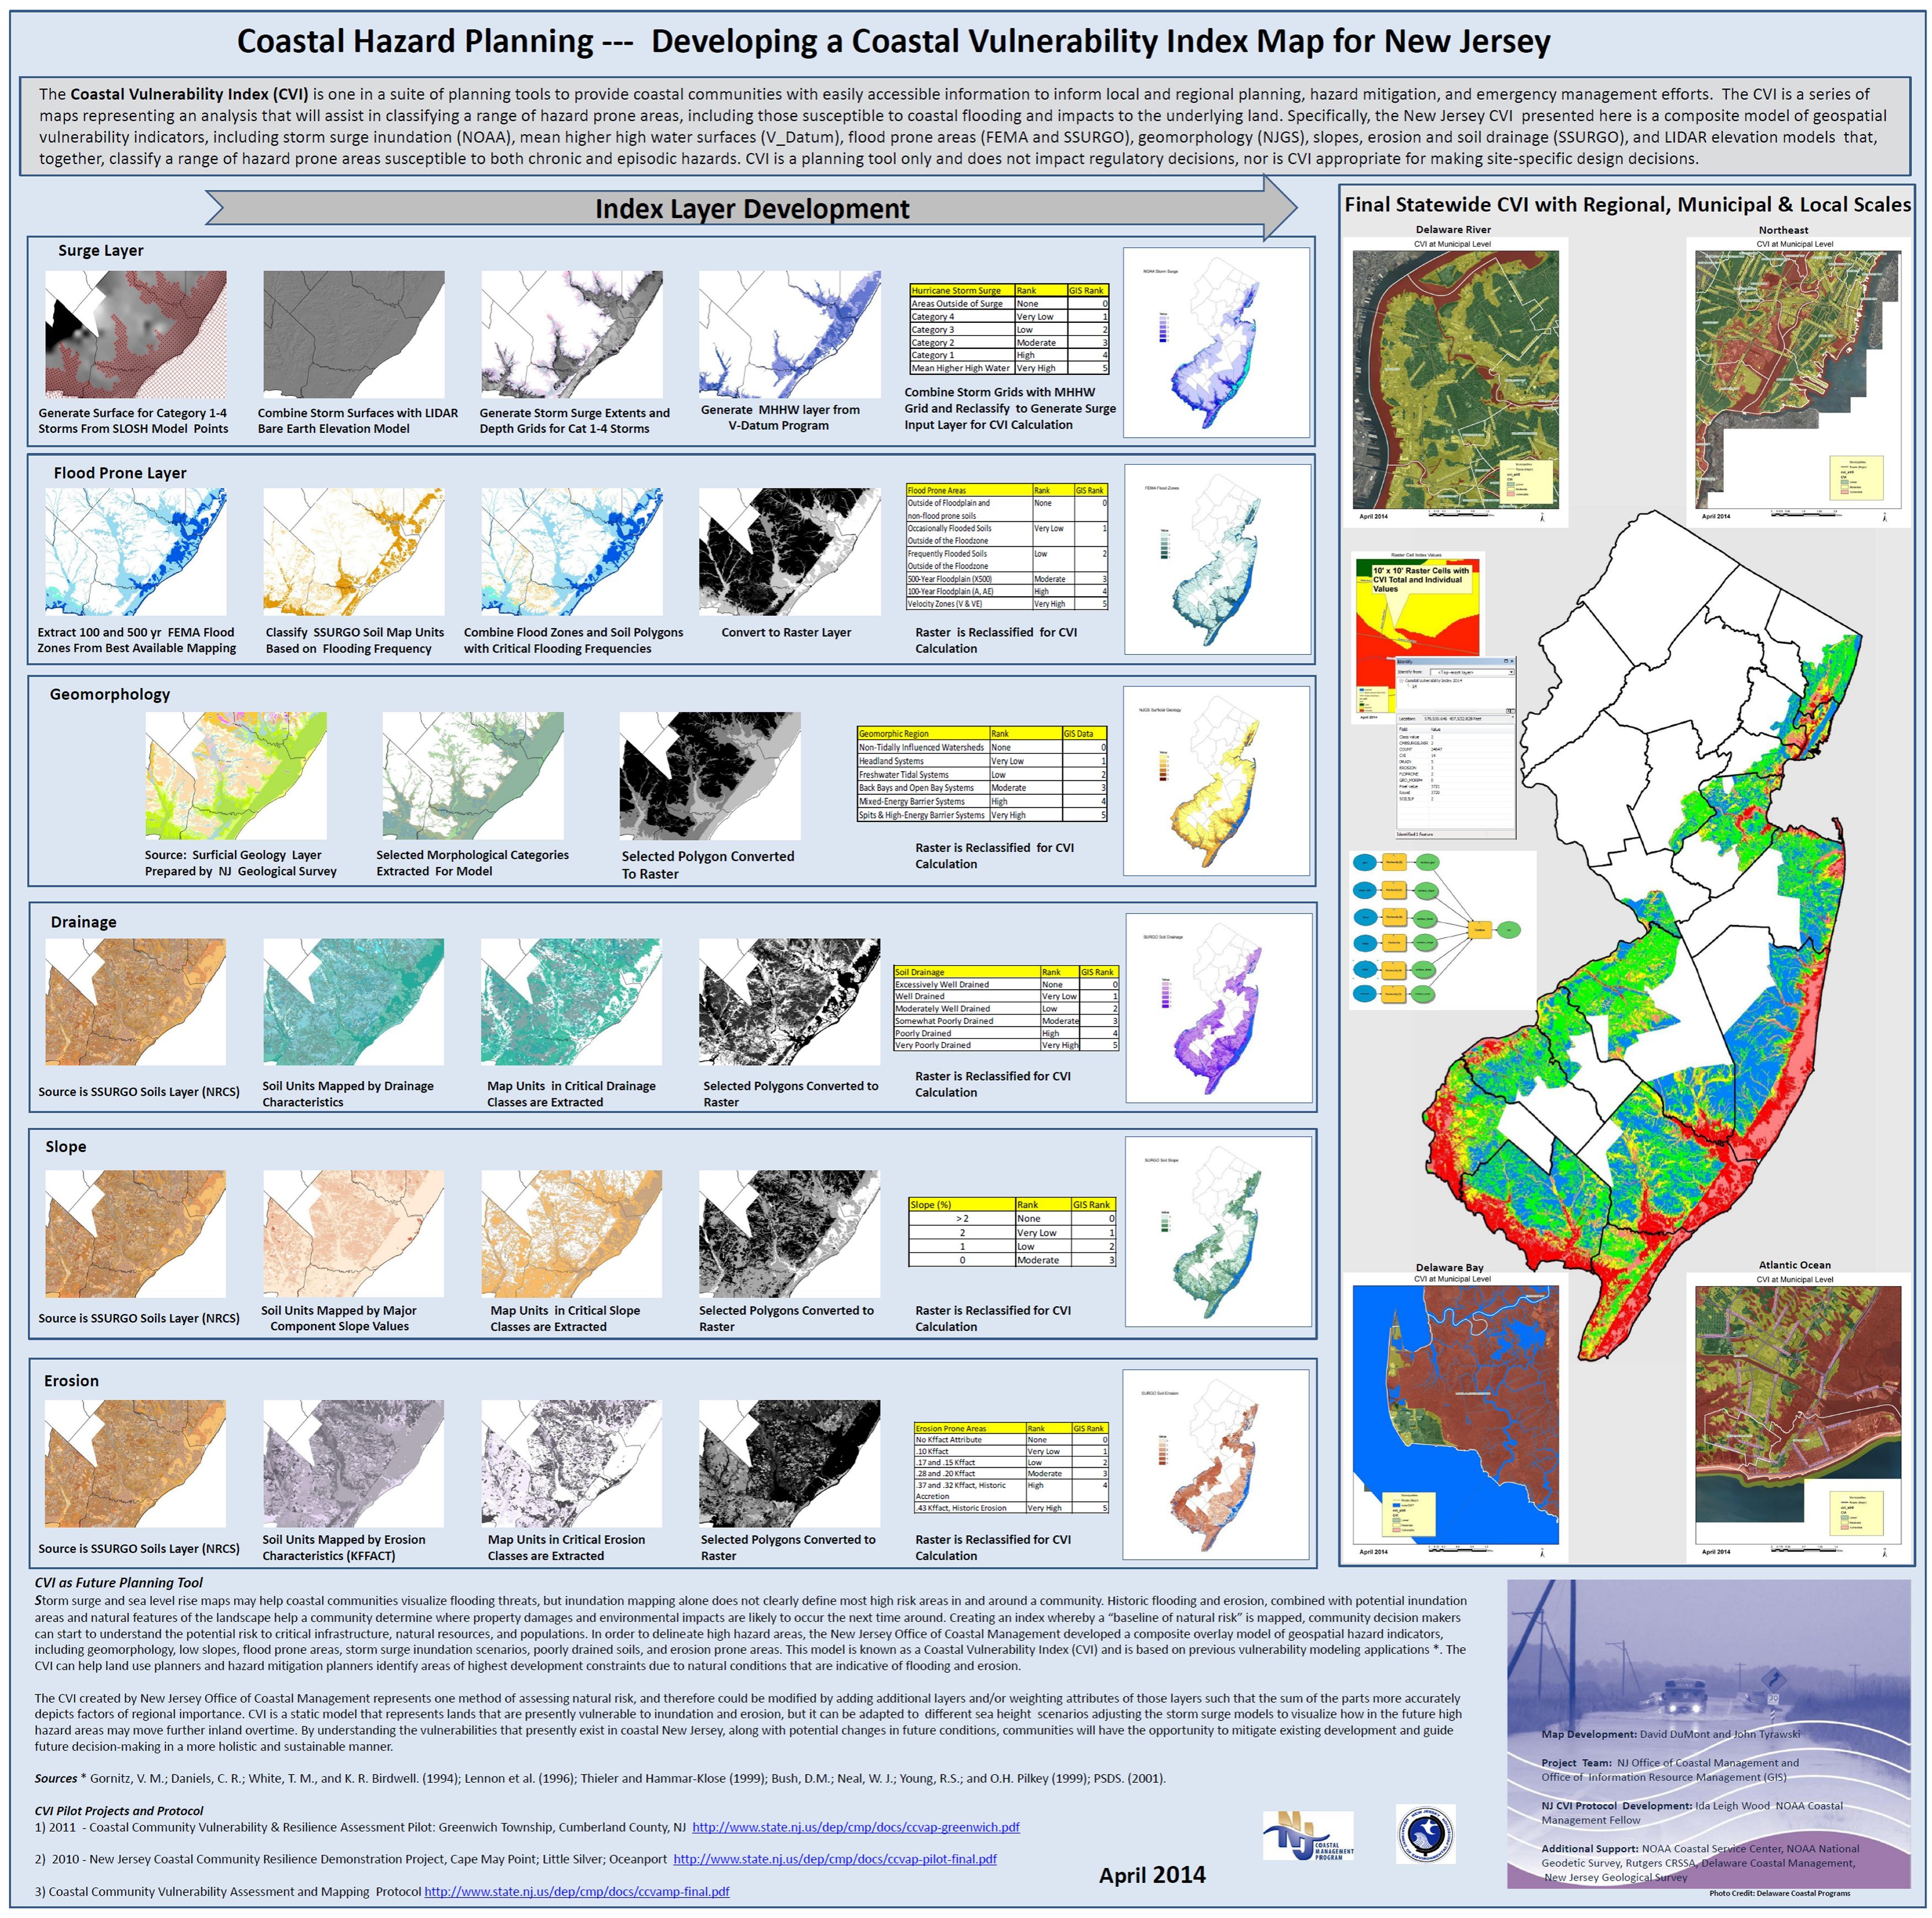 Coastal Hazard Planning Developing a Coastal Vulnerability Index Map for New Jersey